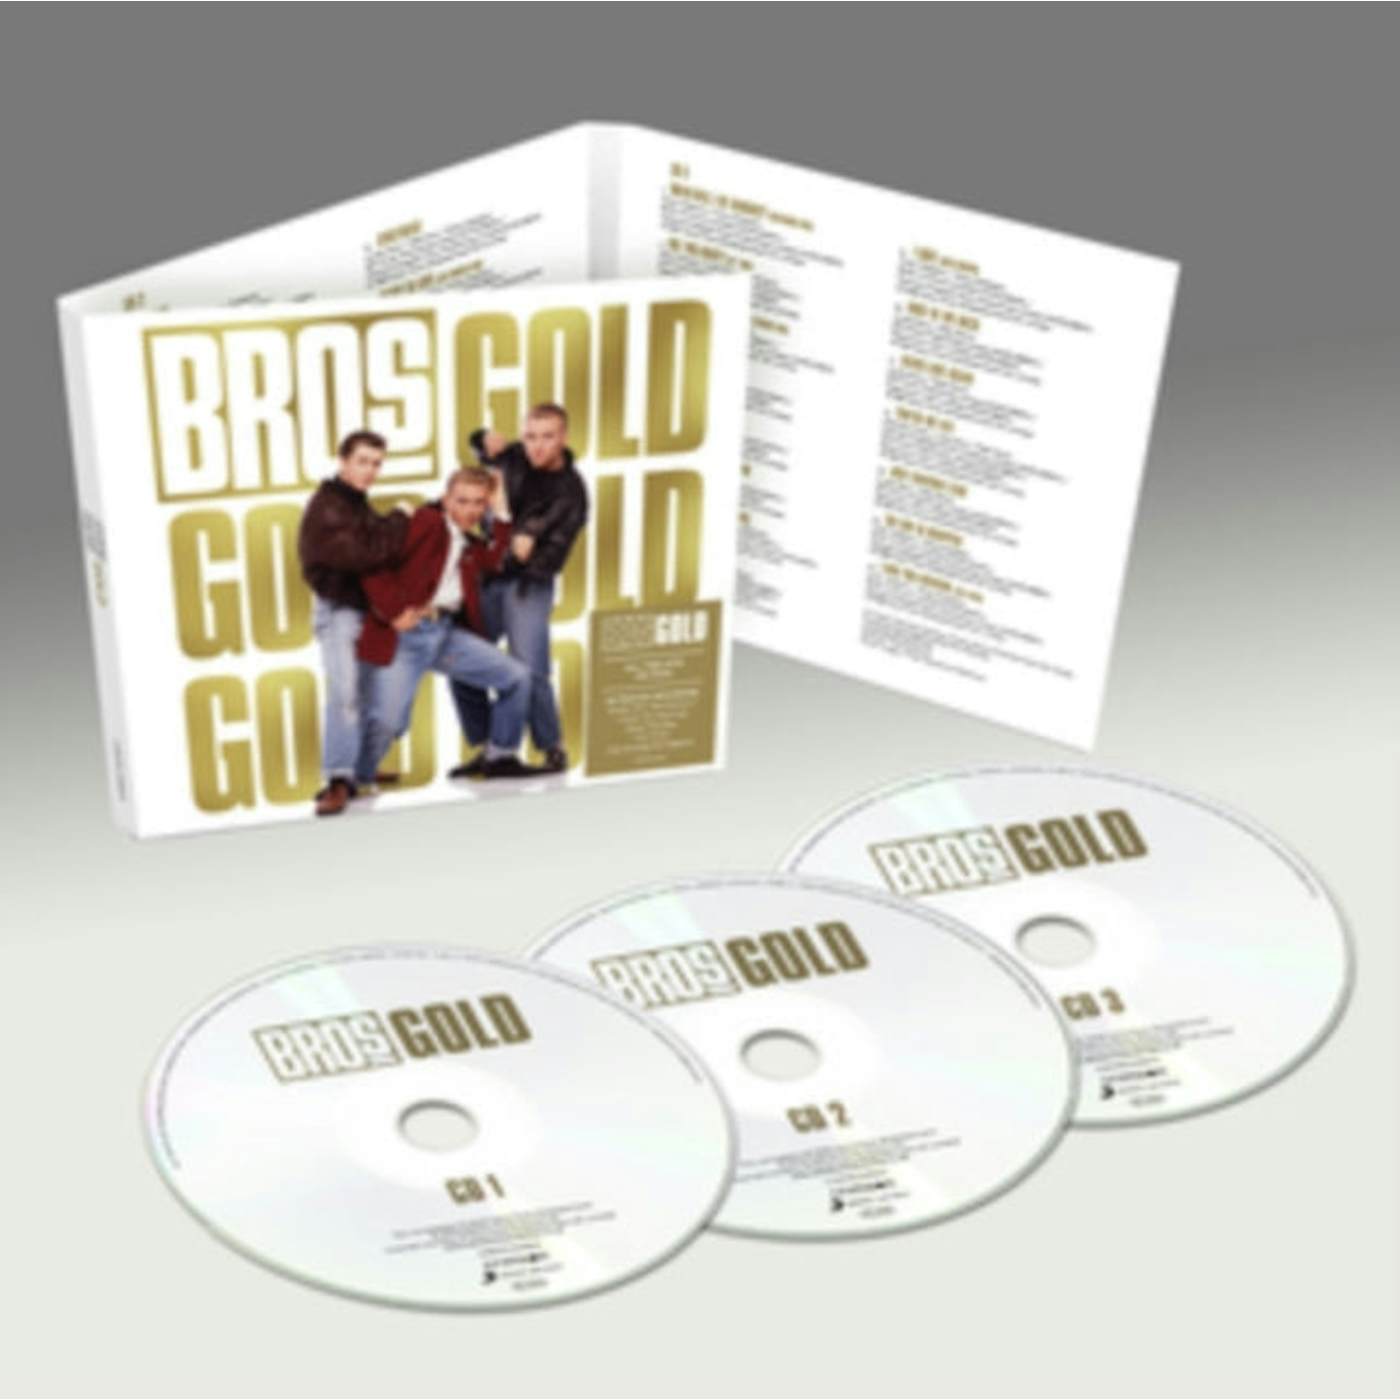 Bros CD - Gold